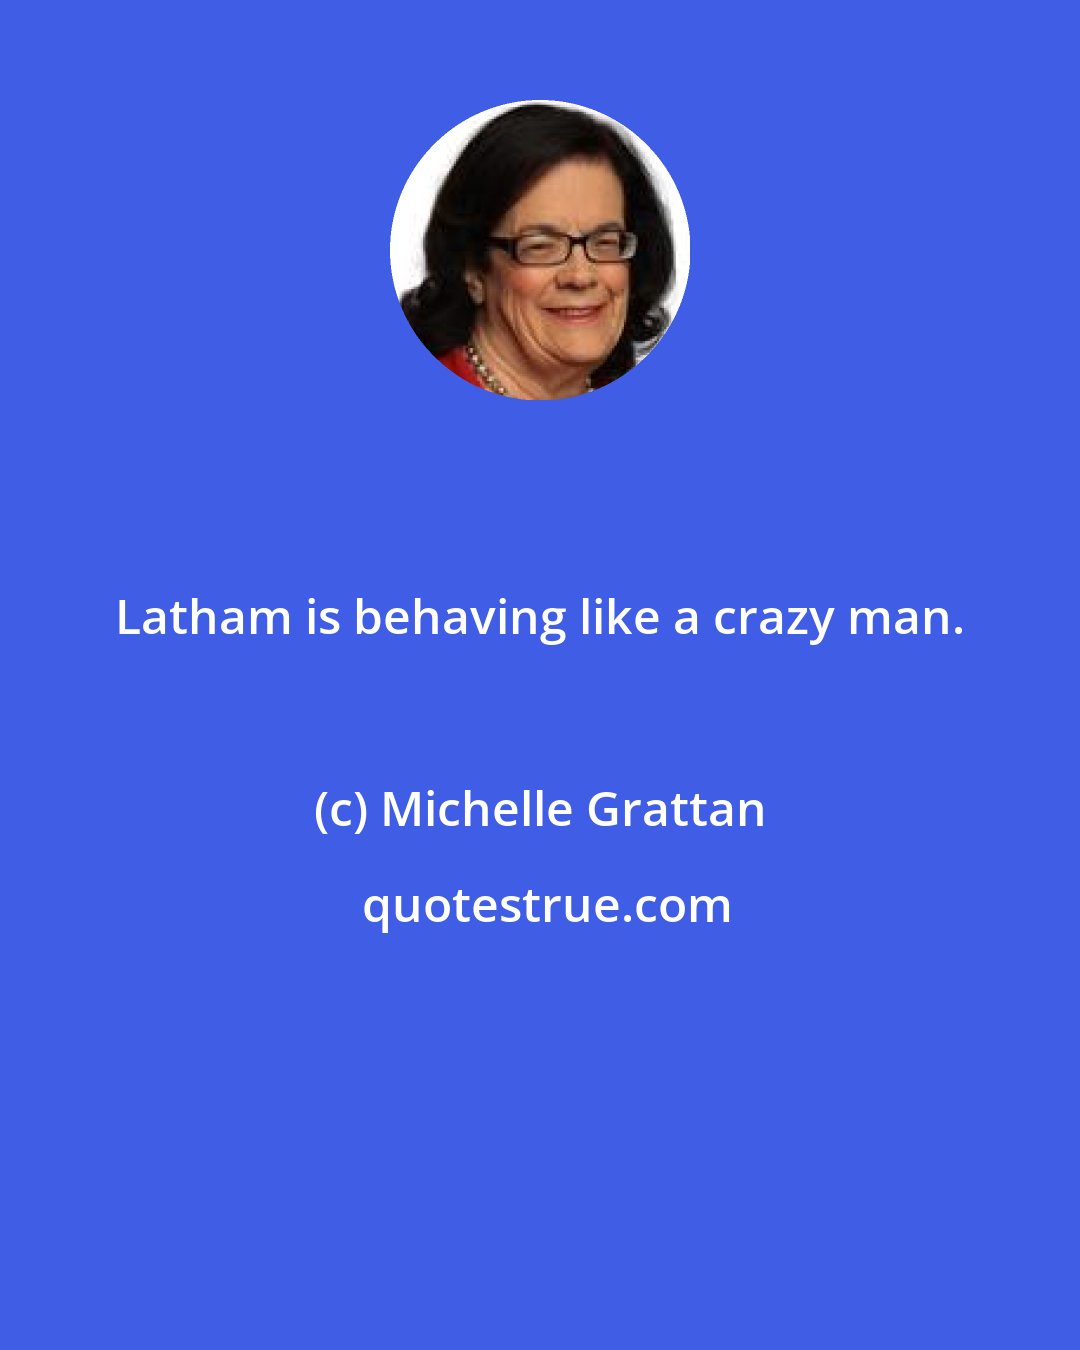 Michelle Grattan: Latham is behaving like a crazy man.